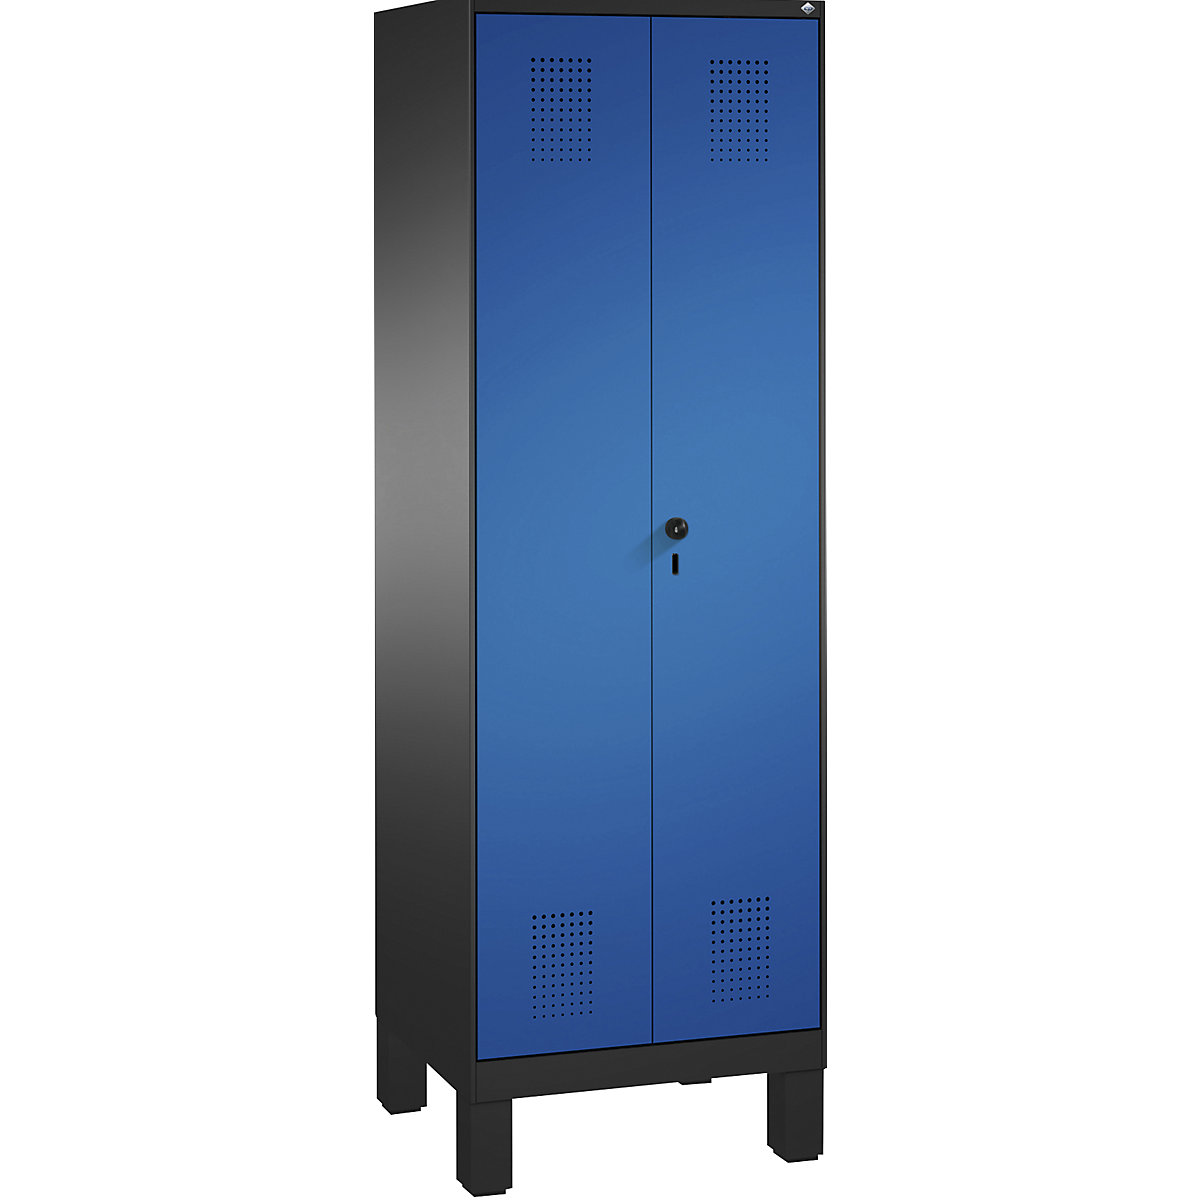 Skladovací skříň EVOLO s dveřmi se zavíráním k sobě a s nohami – C+P, 1 oddíl, šířka 600 mm, se 4 policemi, černošedá / enciánová modrá-7